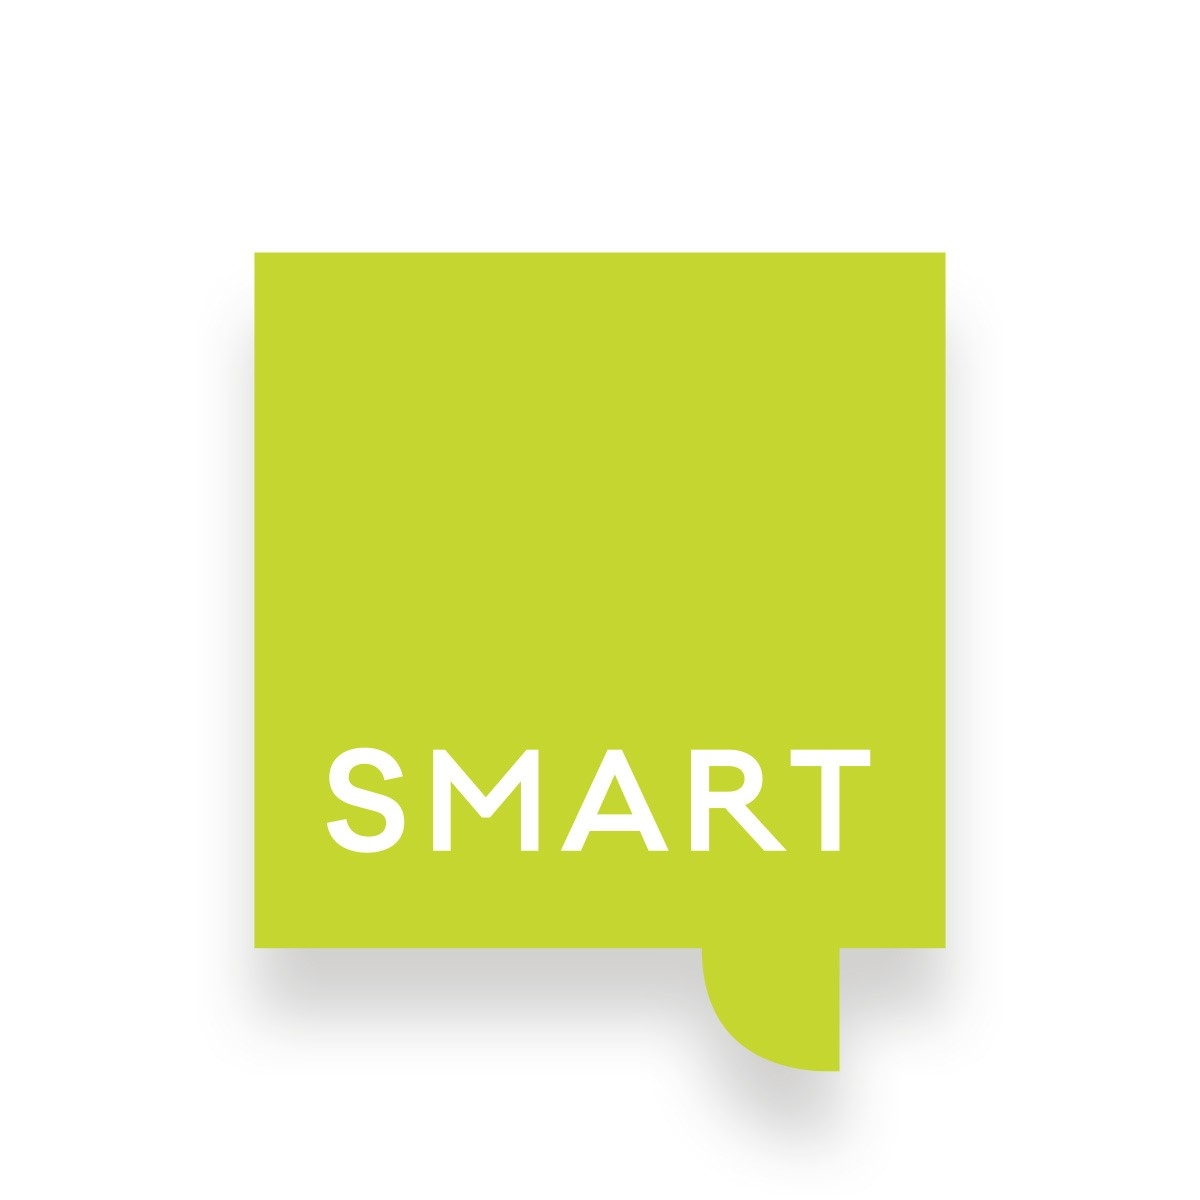 Logo SMART Immobilien GmbH